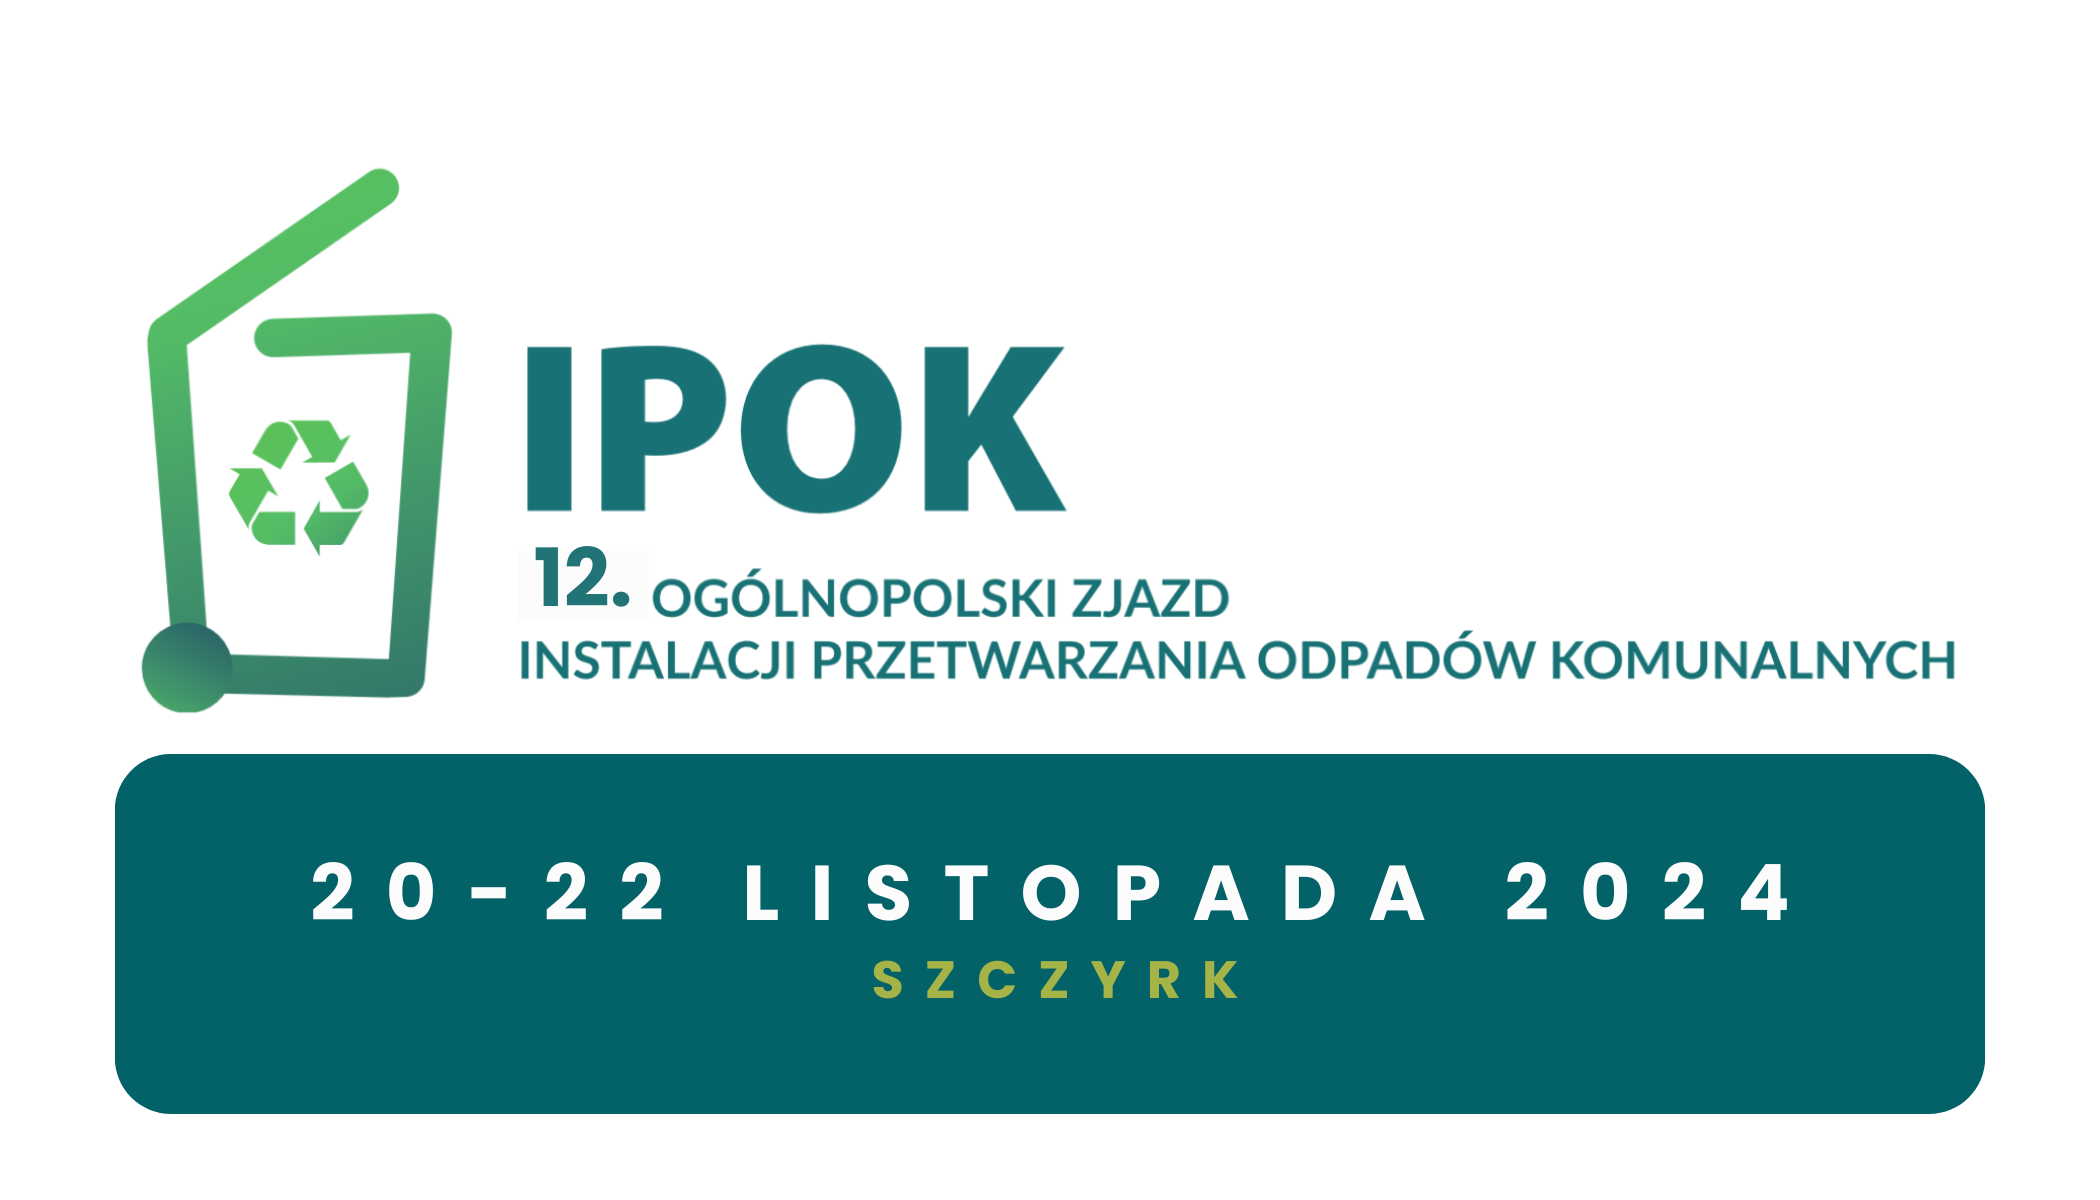 12. Ogólnopolski<br><strong>ZJAZD IPOK</strong><br>20-22 listopada 2024 <br>Szczyrk thumbnail